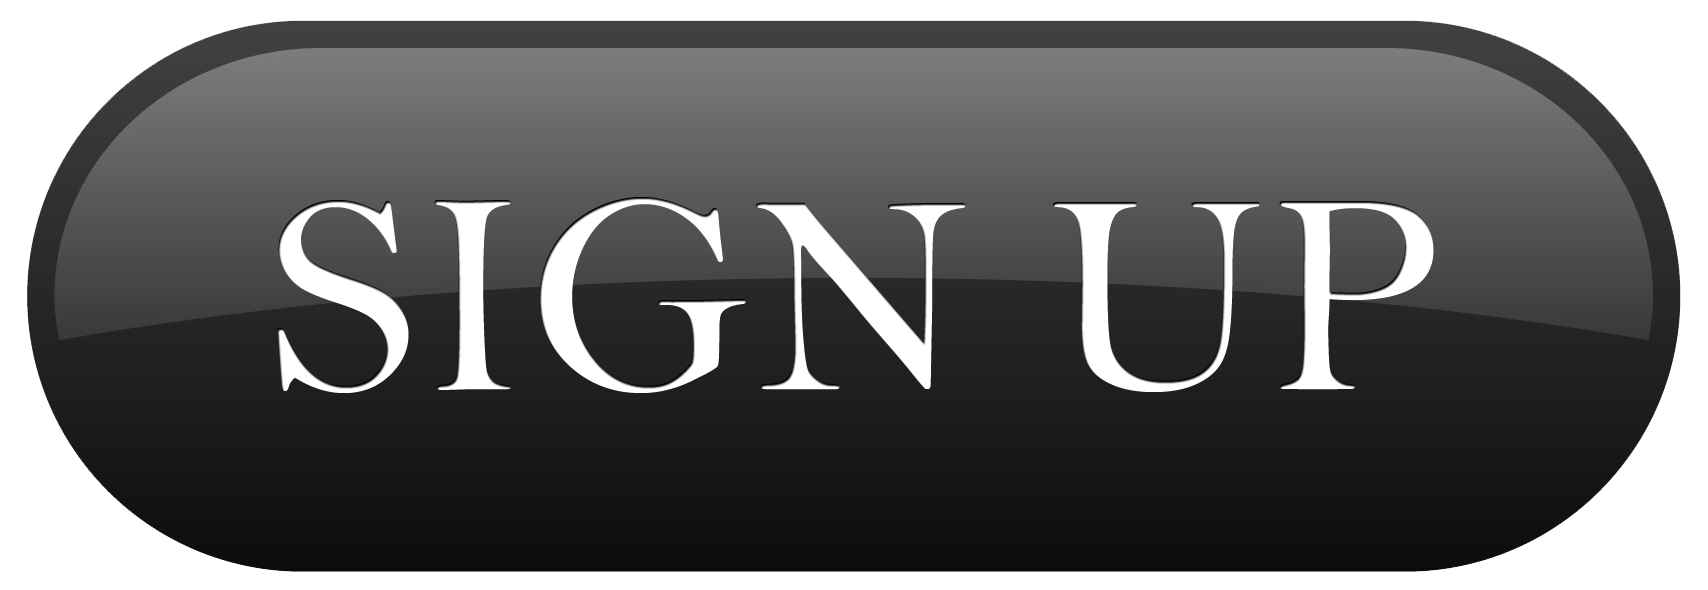 Sign Up Button PNG Transparent Image